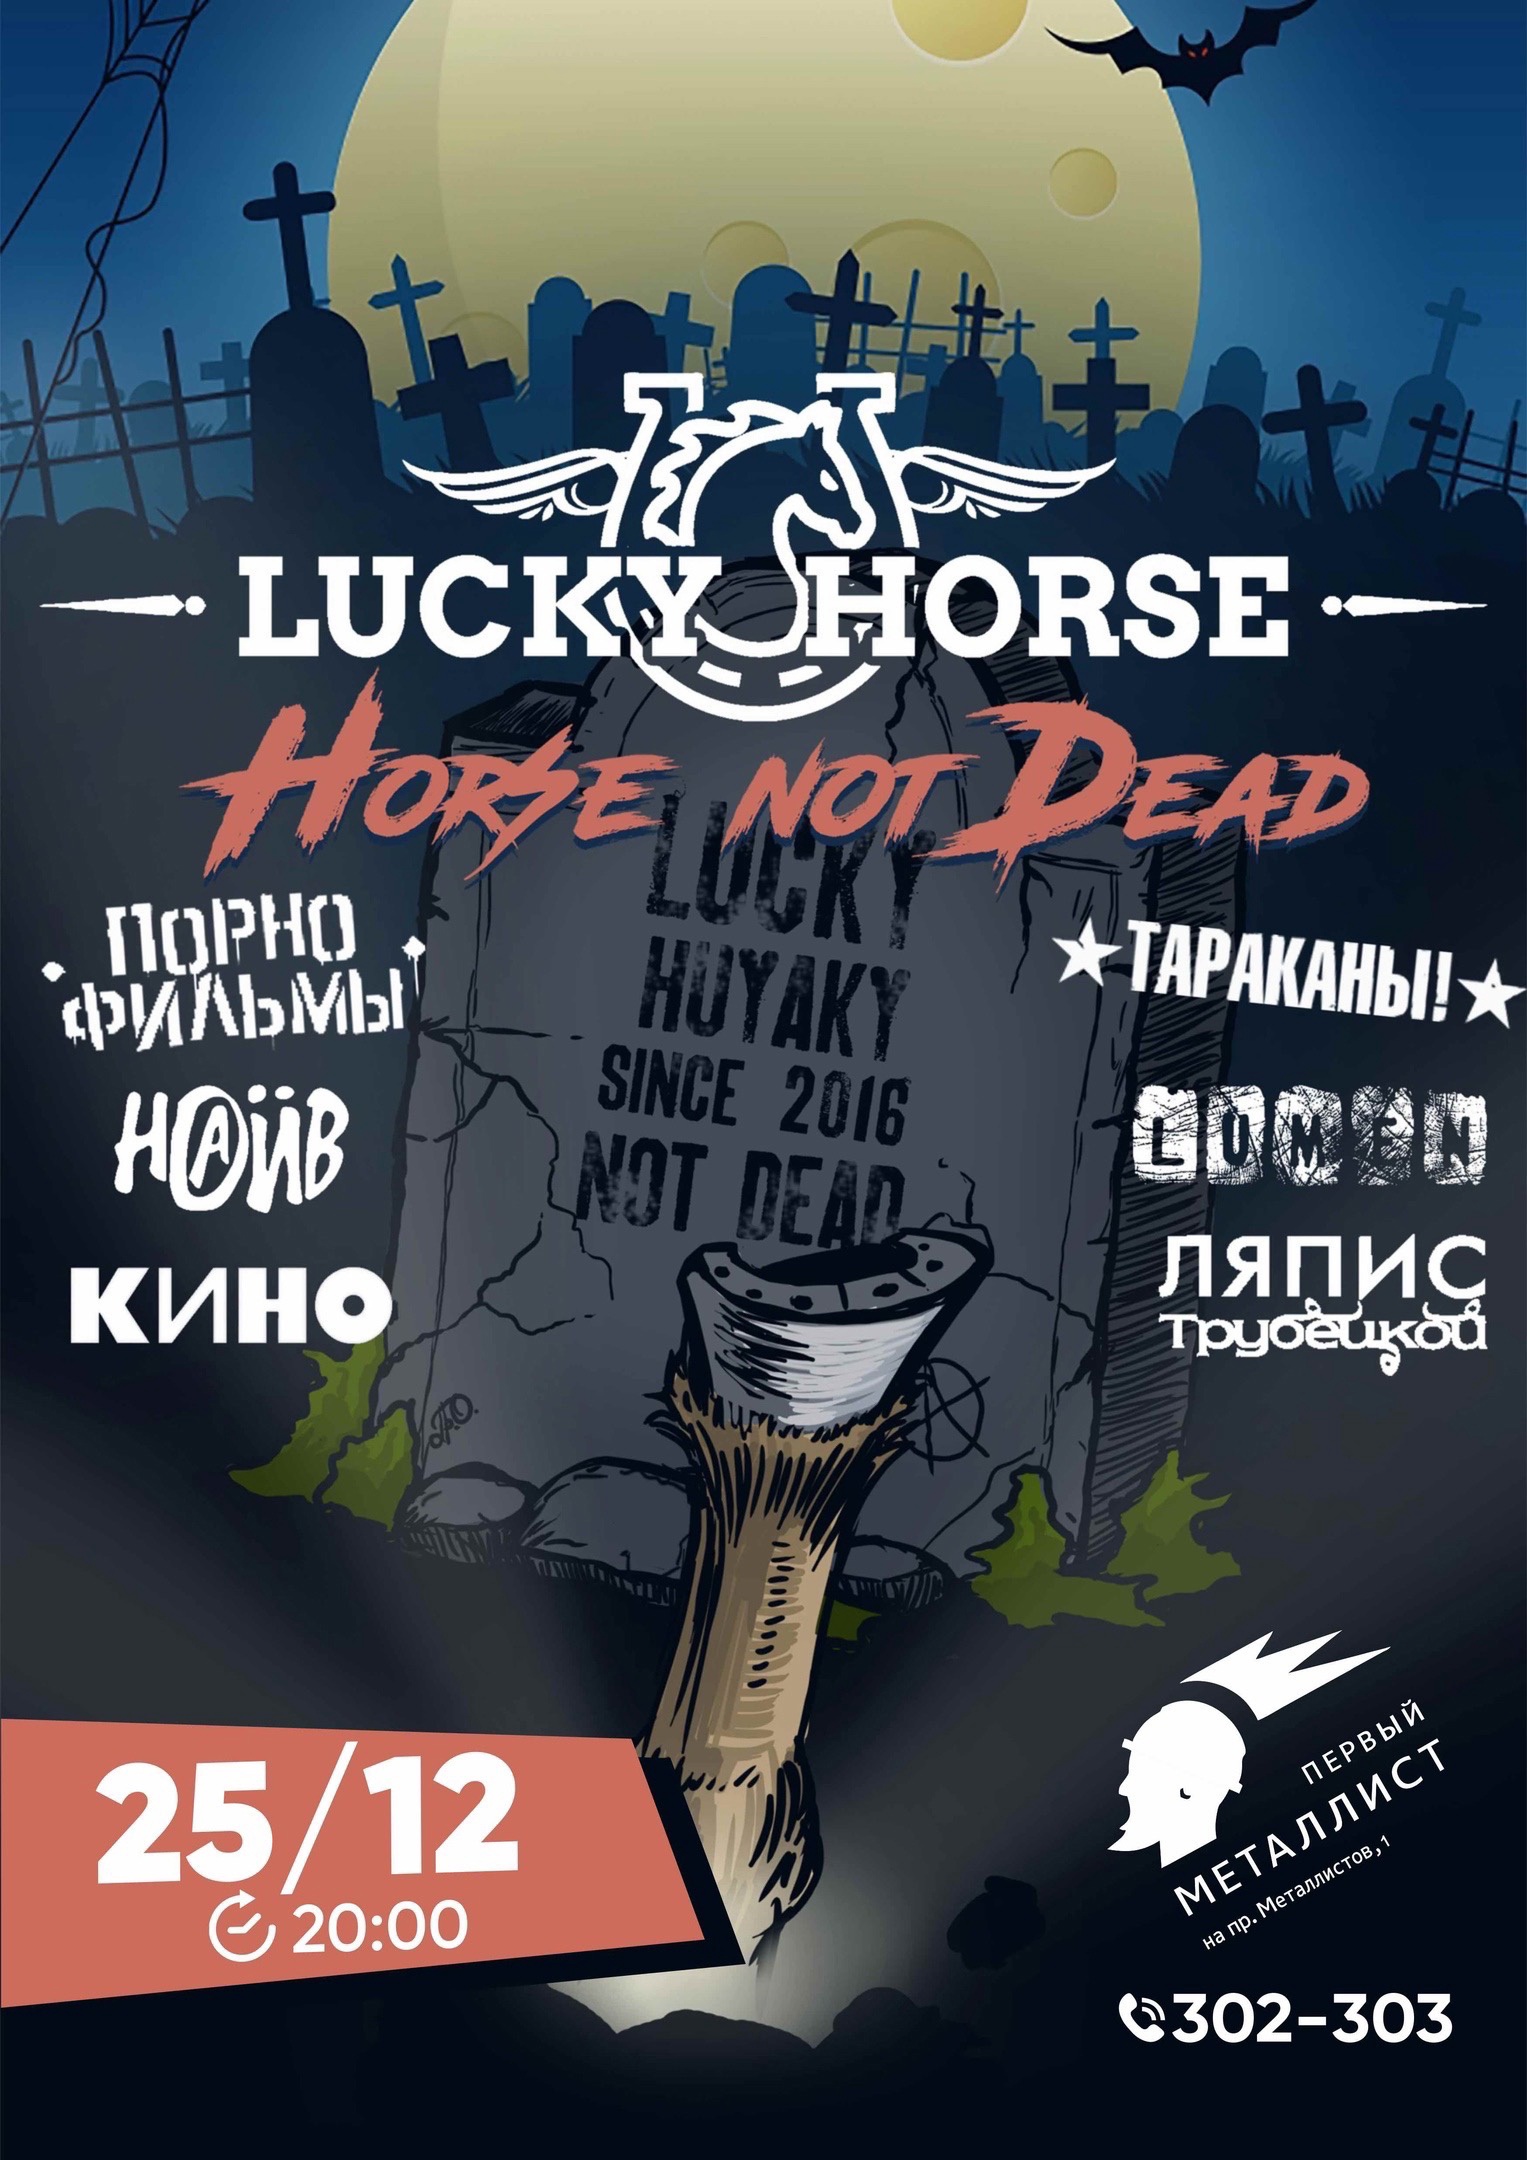 Lucky Horse с программой “Hors not dead” 25.12.2021